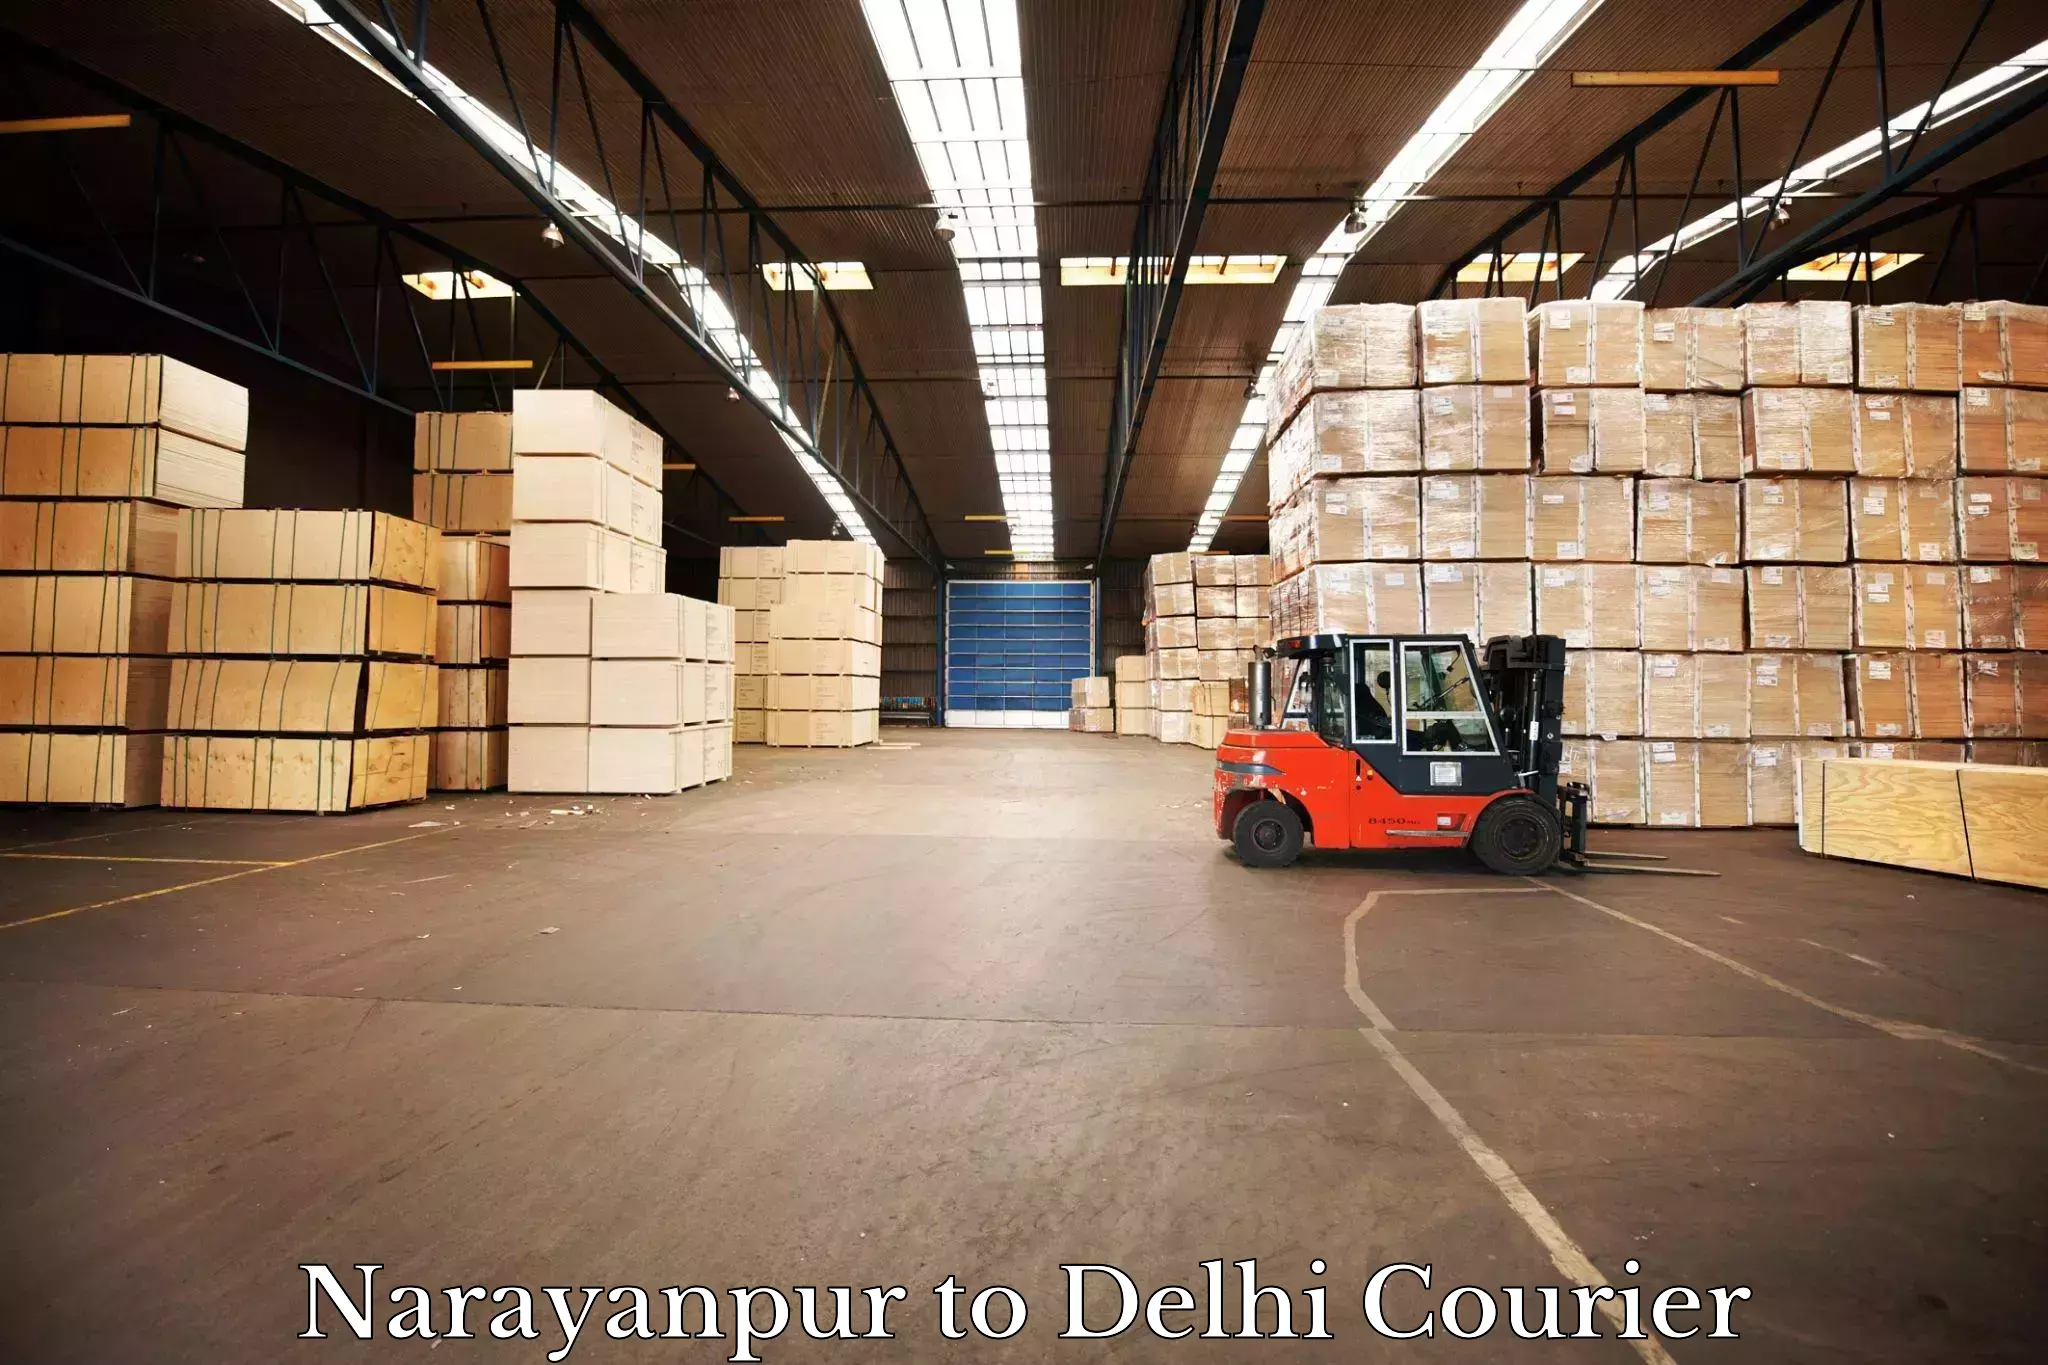 Digital courier platforms Narayanpur to Ramesh Nagar